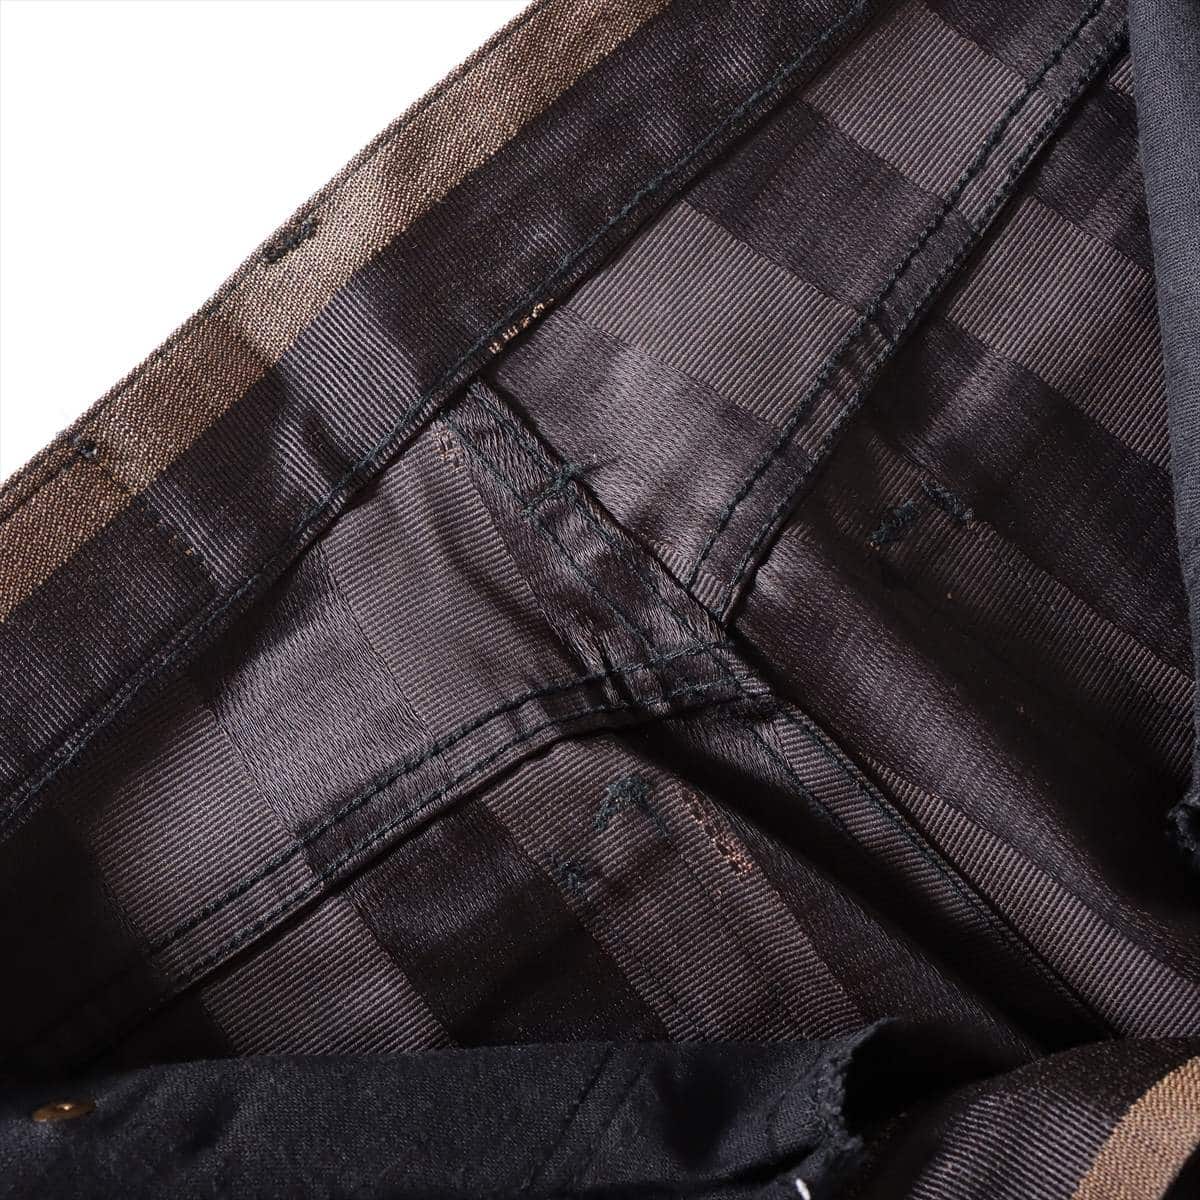 Fendi Cotton & polyester Pants I 41 Ladies' Black × Brown